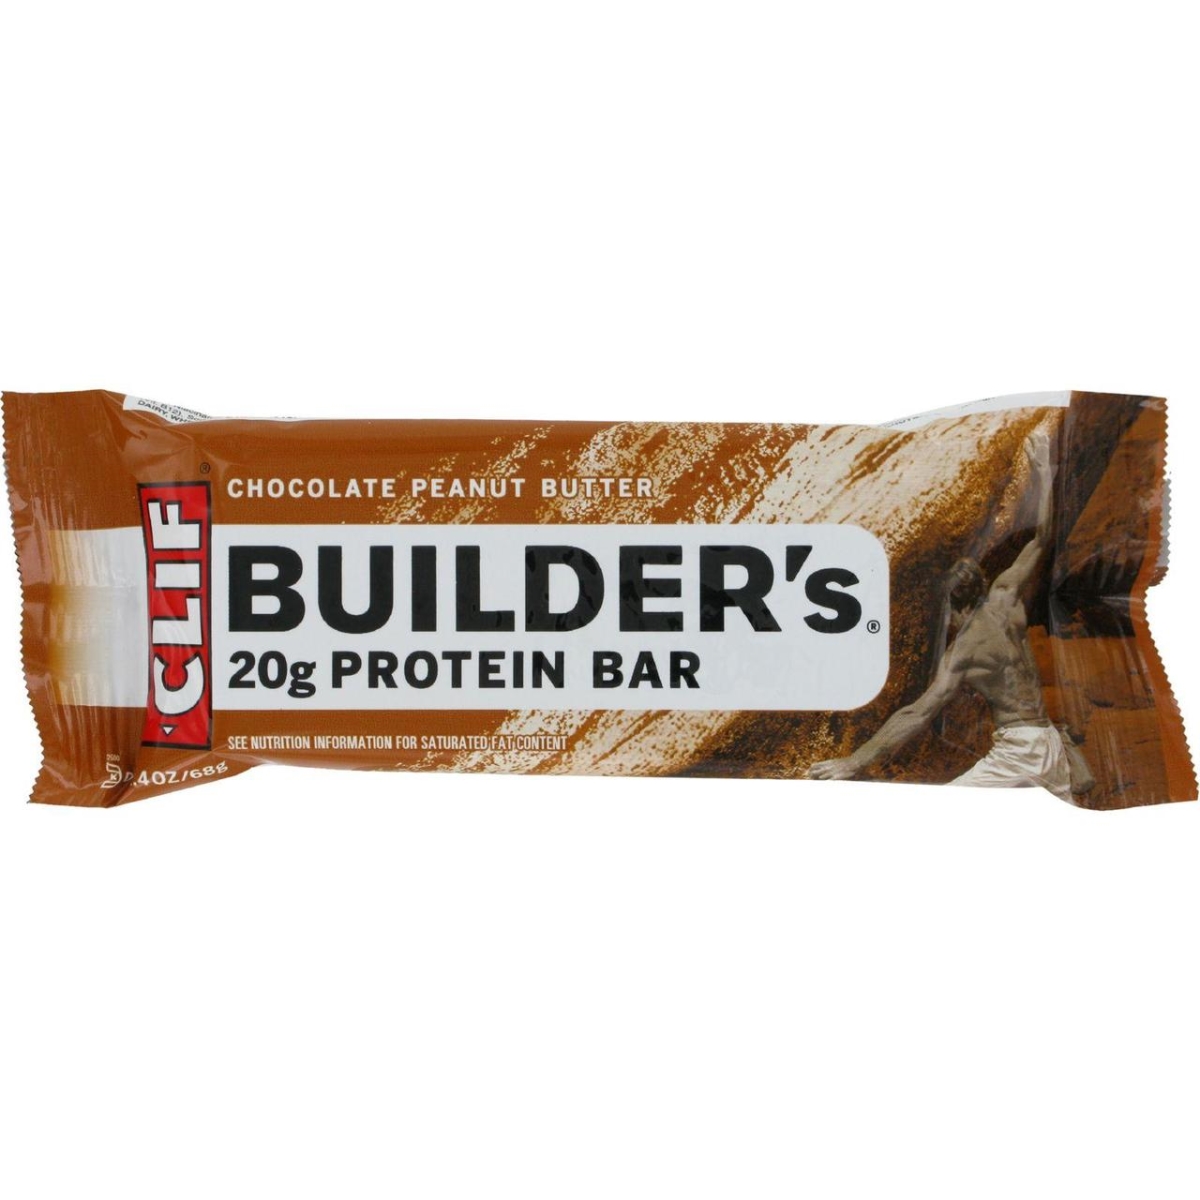 Clif Bar Hg0446385 2.4 Oz Chocolate Peanut Butter Builder Bar - Case Of 12